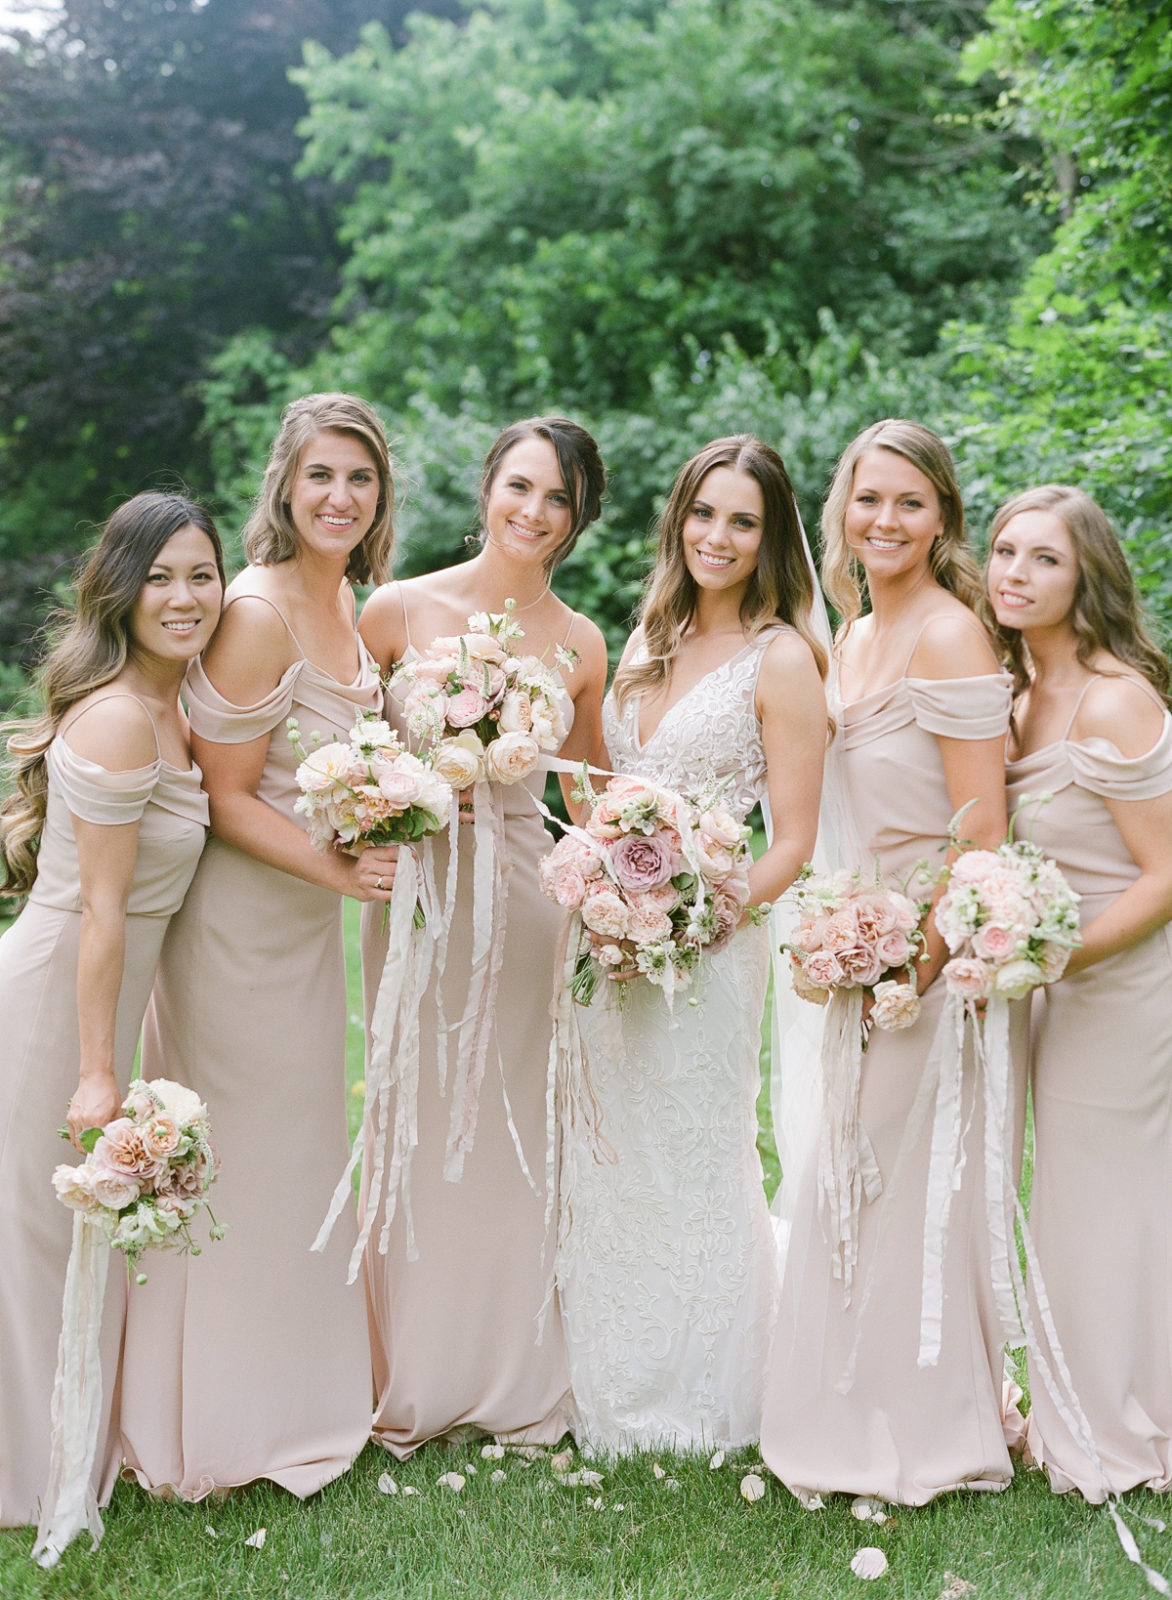 Laurel Hall Wedding Photos | Molly Carr Photography | Fine Art Film Photographer | Chicago Wedding | Summer Garden Party Wedding | European Wedding Inspiration | Bridal Party